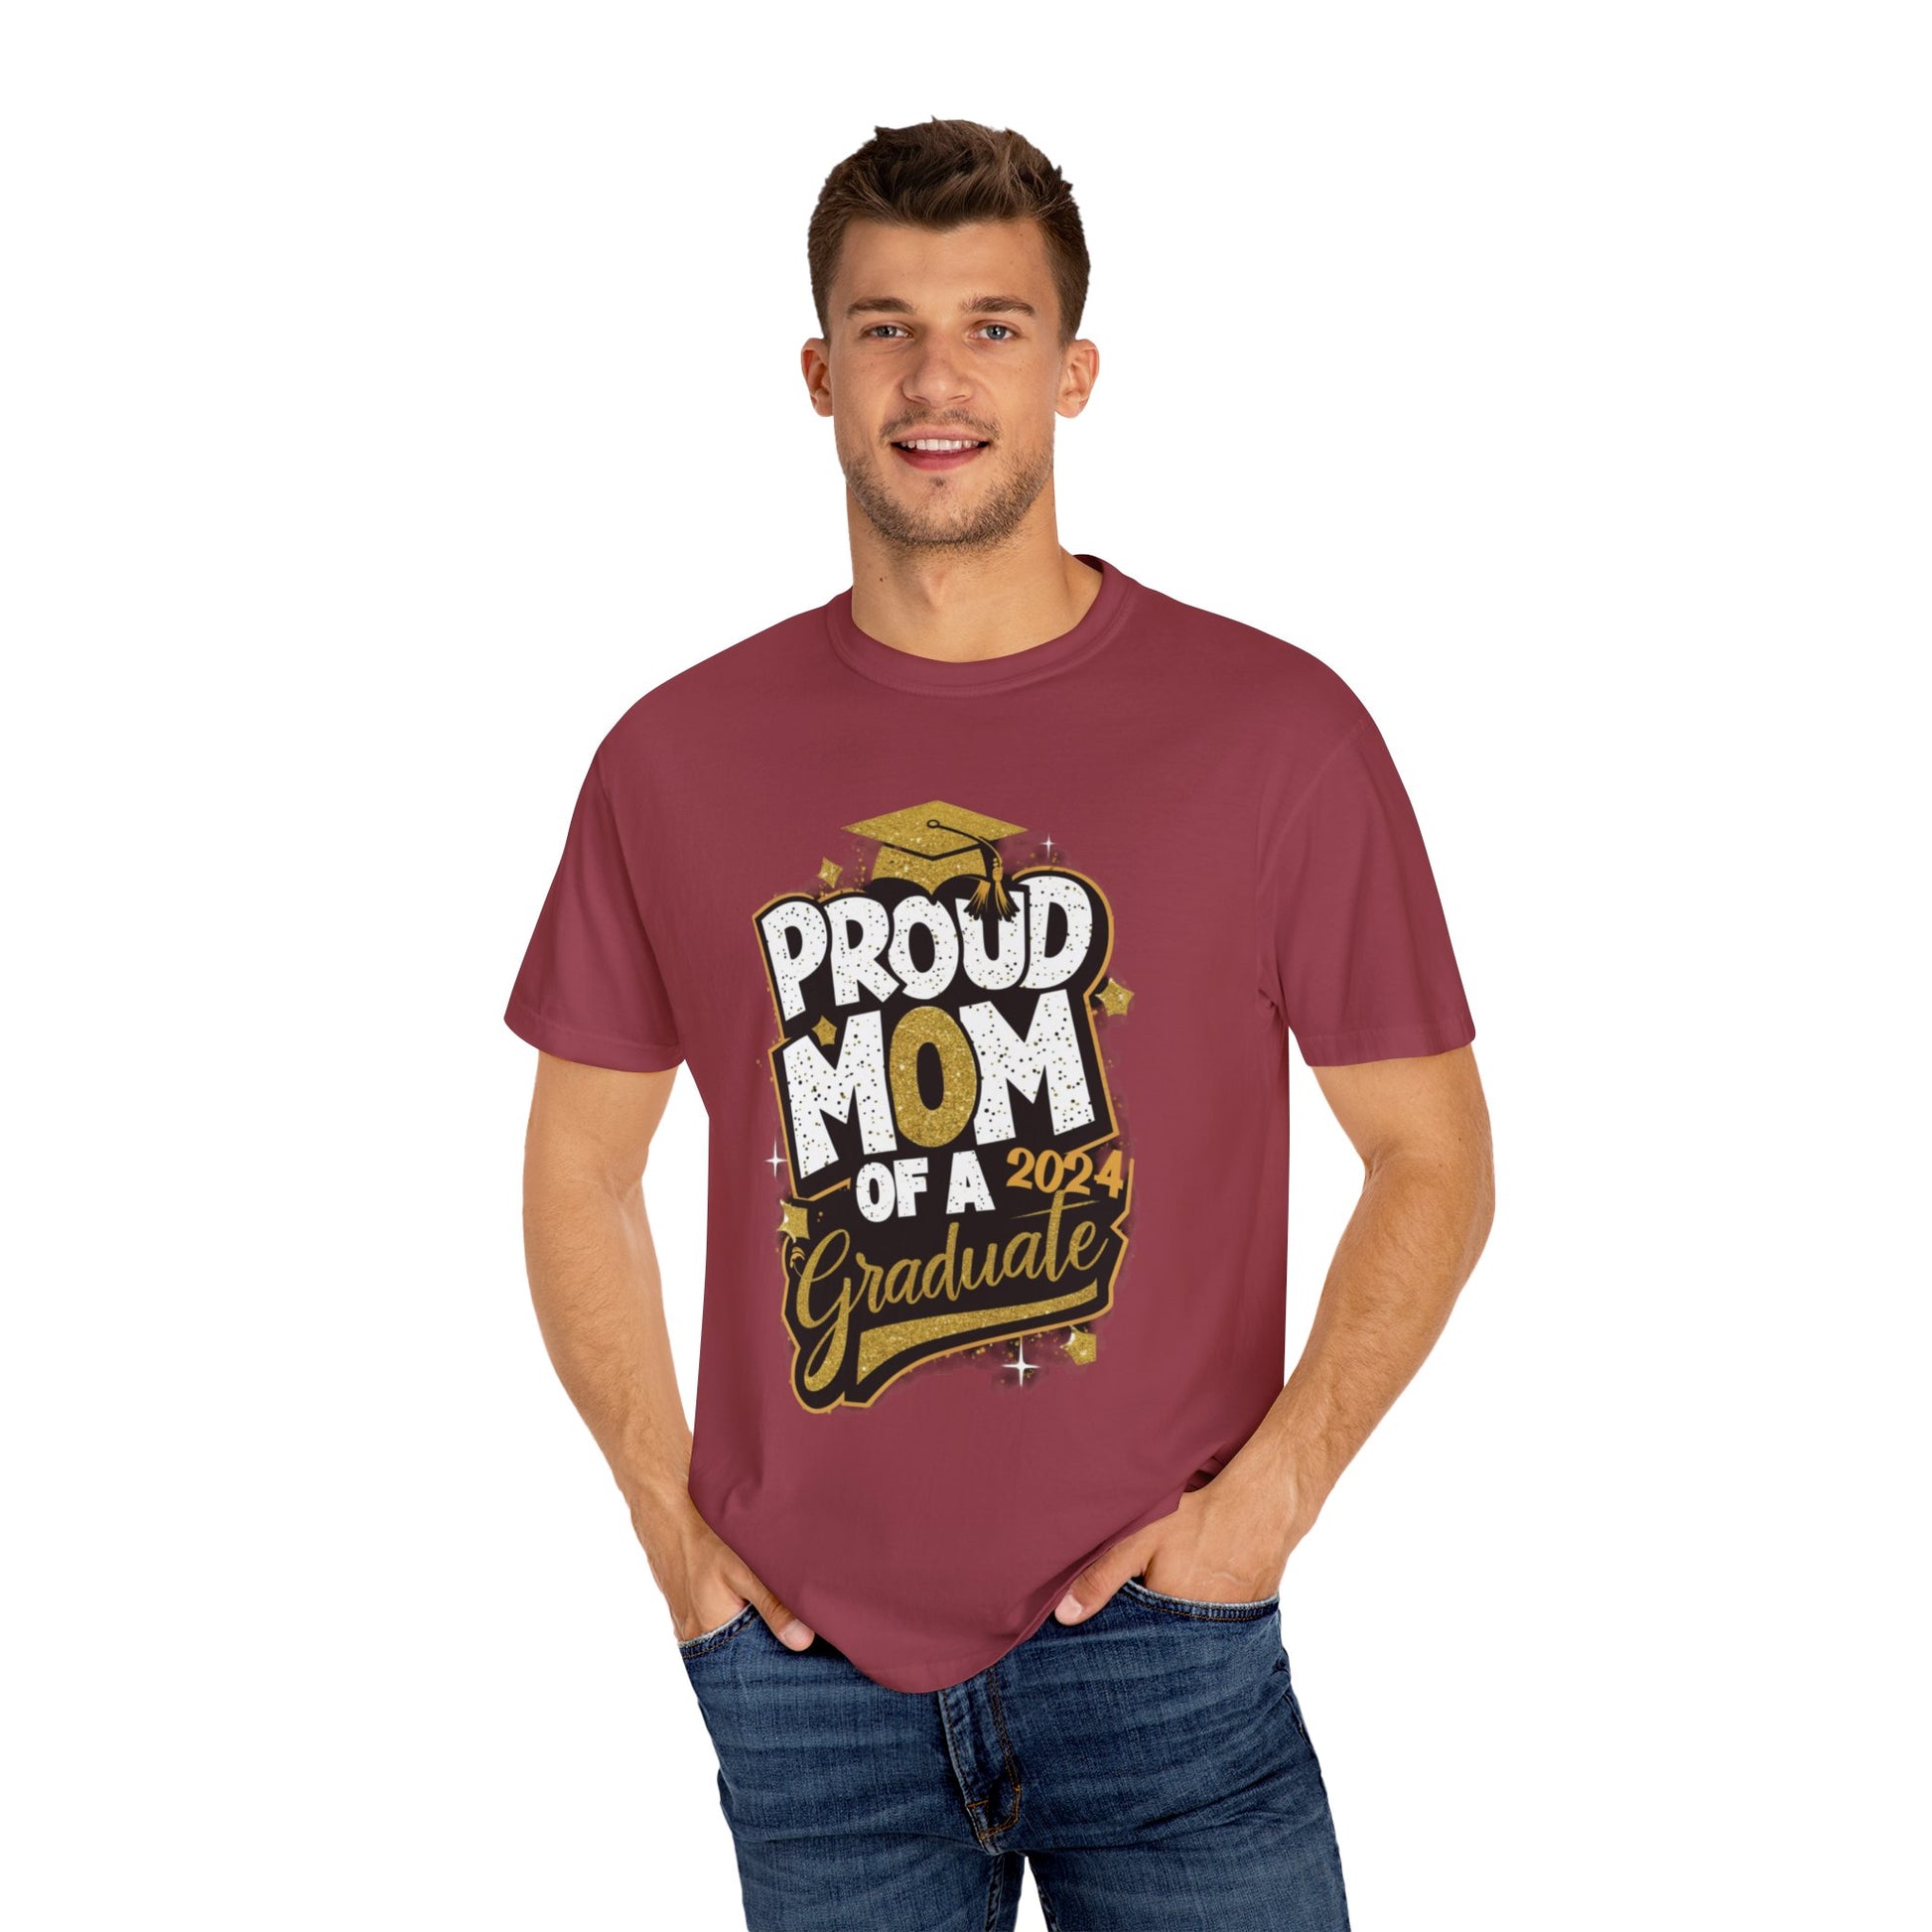 Proud Mom of a 2024 Graduate Unisex Garment-dyed T-shirt Cotton Funny Humorous Graphic Soft Premium Unisex Men Women Chili T-shirt Birthday Gift-36